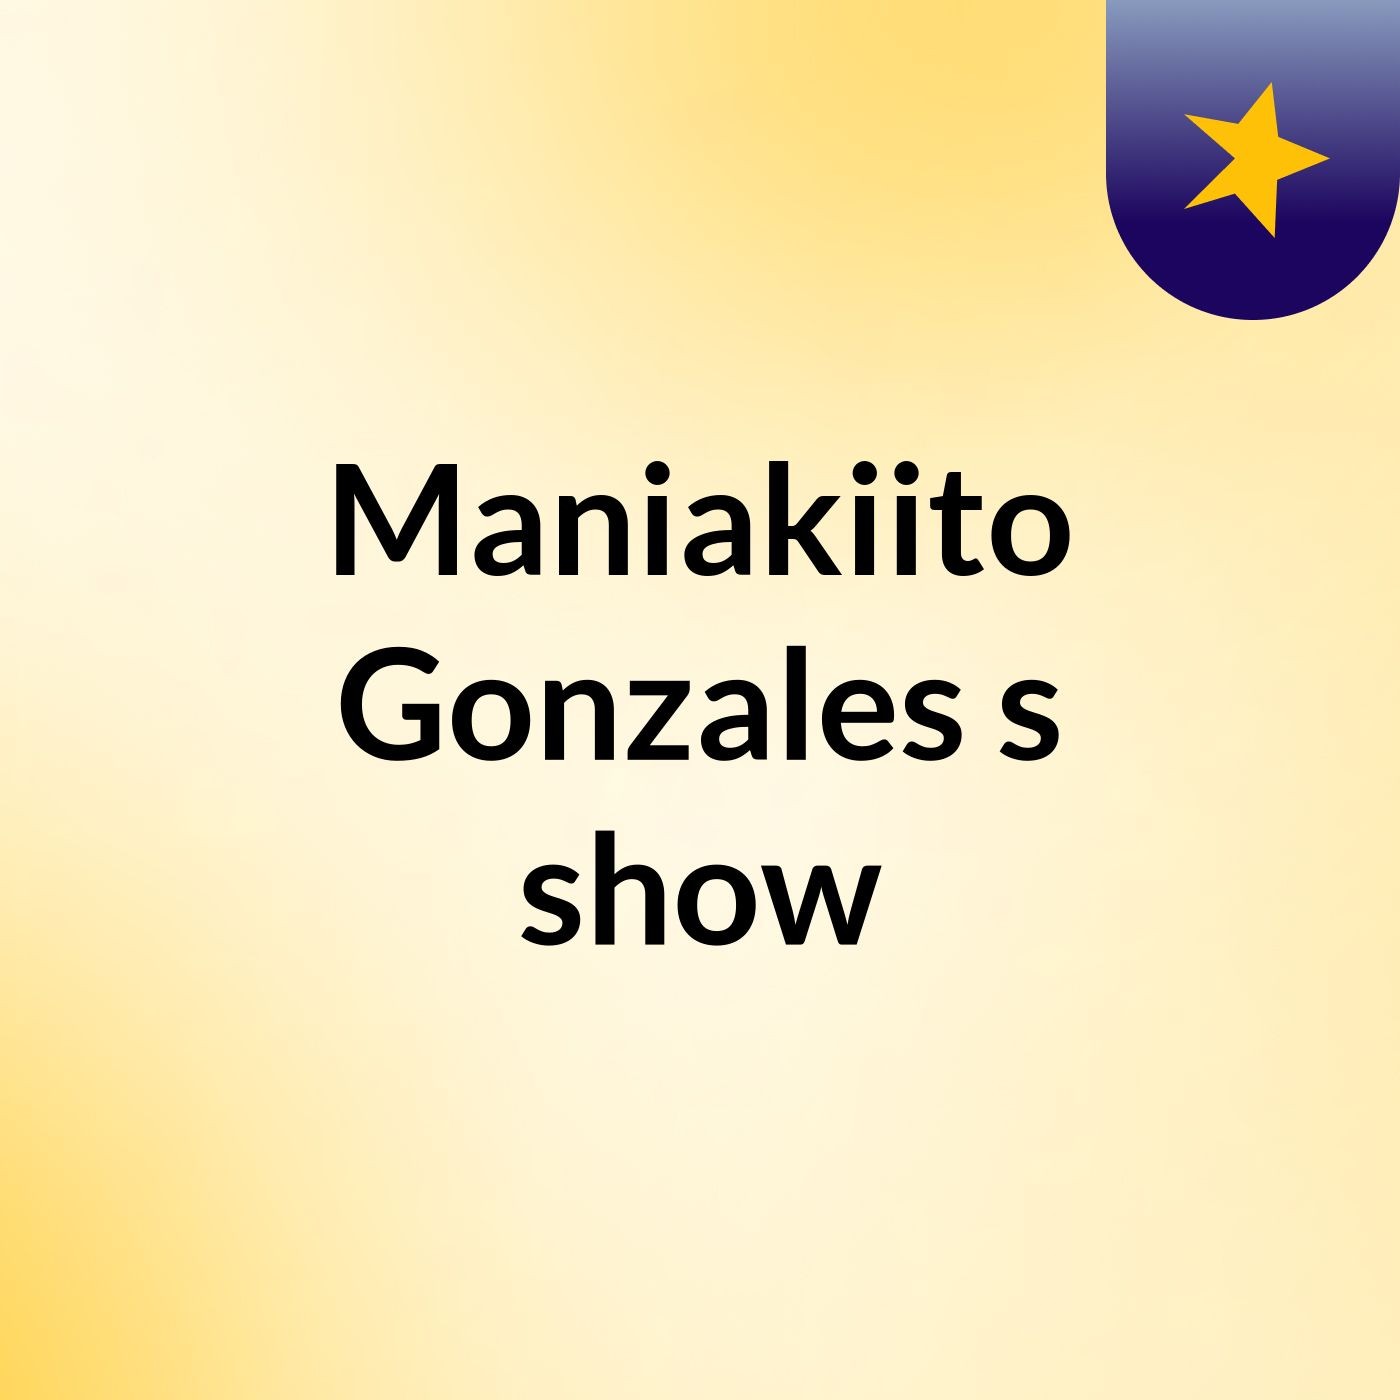 Maniakiito Gonzales's show